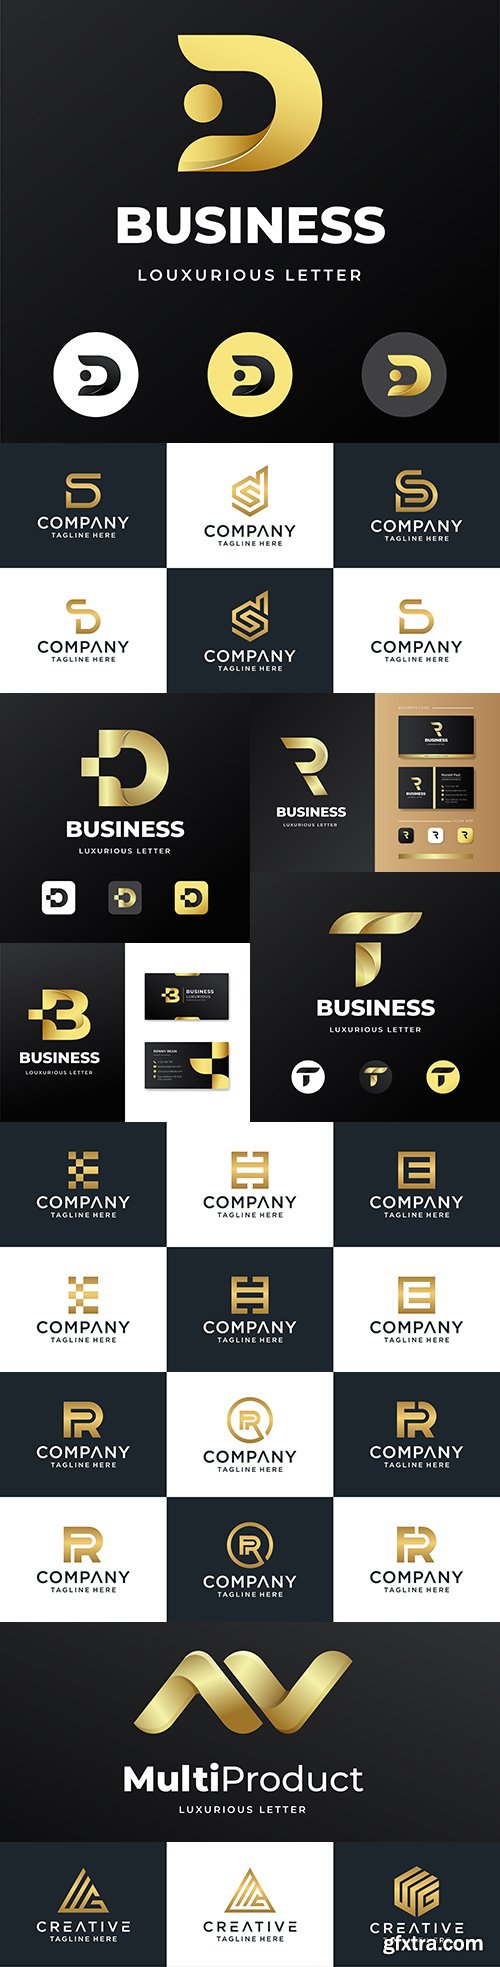 Brand name company business corporate logos design 17
